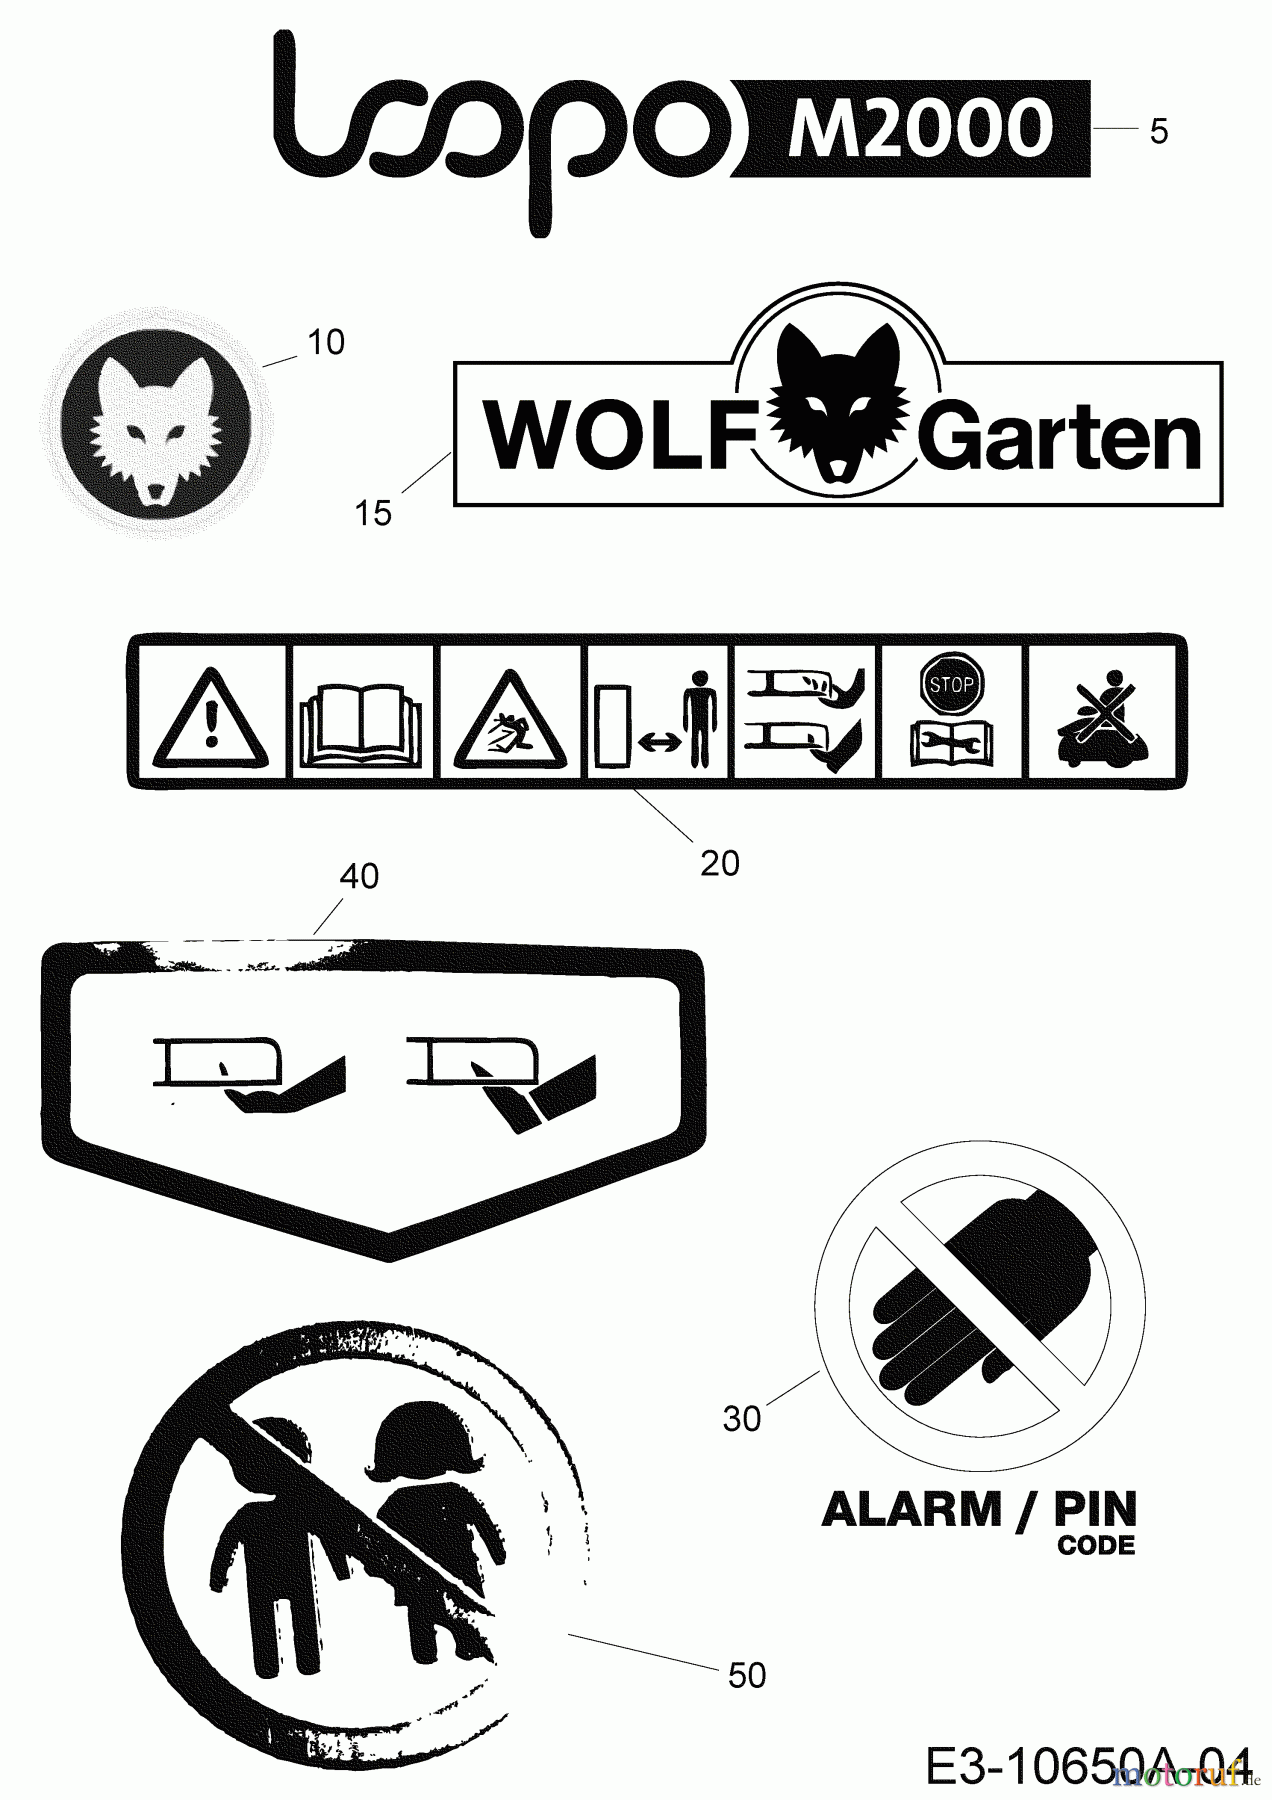  Wolf-Garten Robotic lawn mower Loopo M2000 22BCFAEA650  (2019) Labels